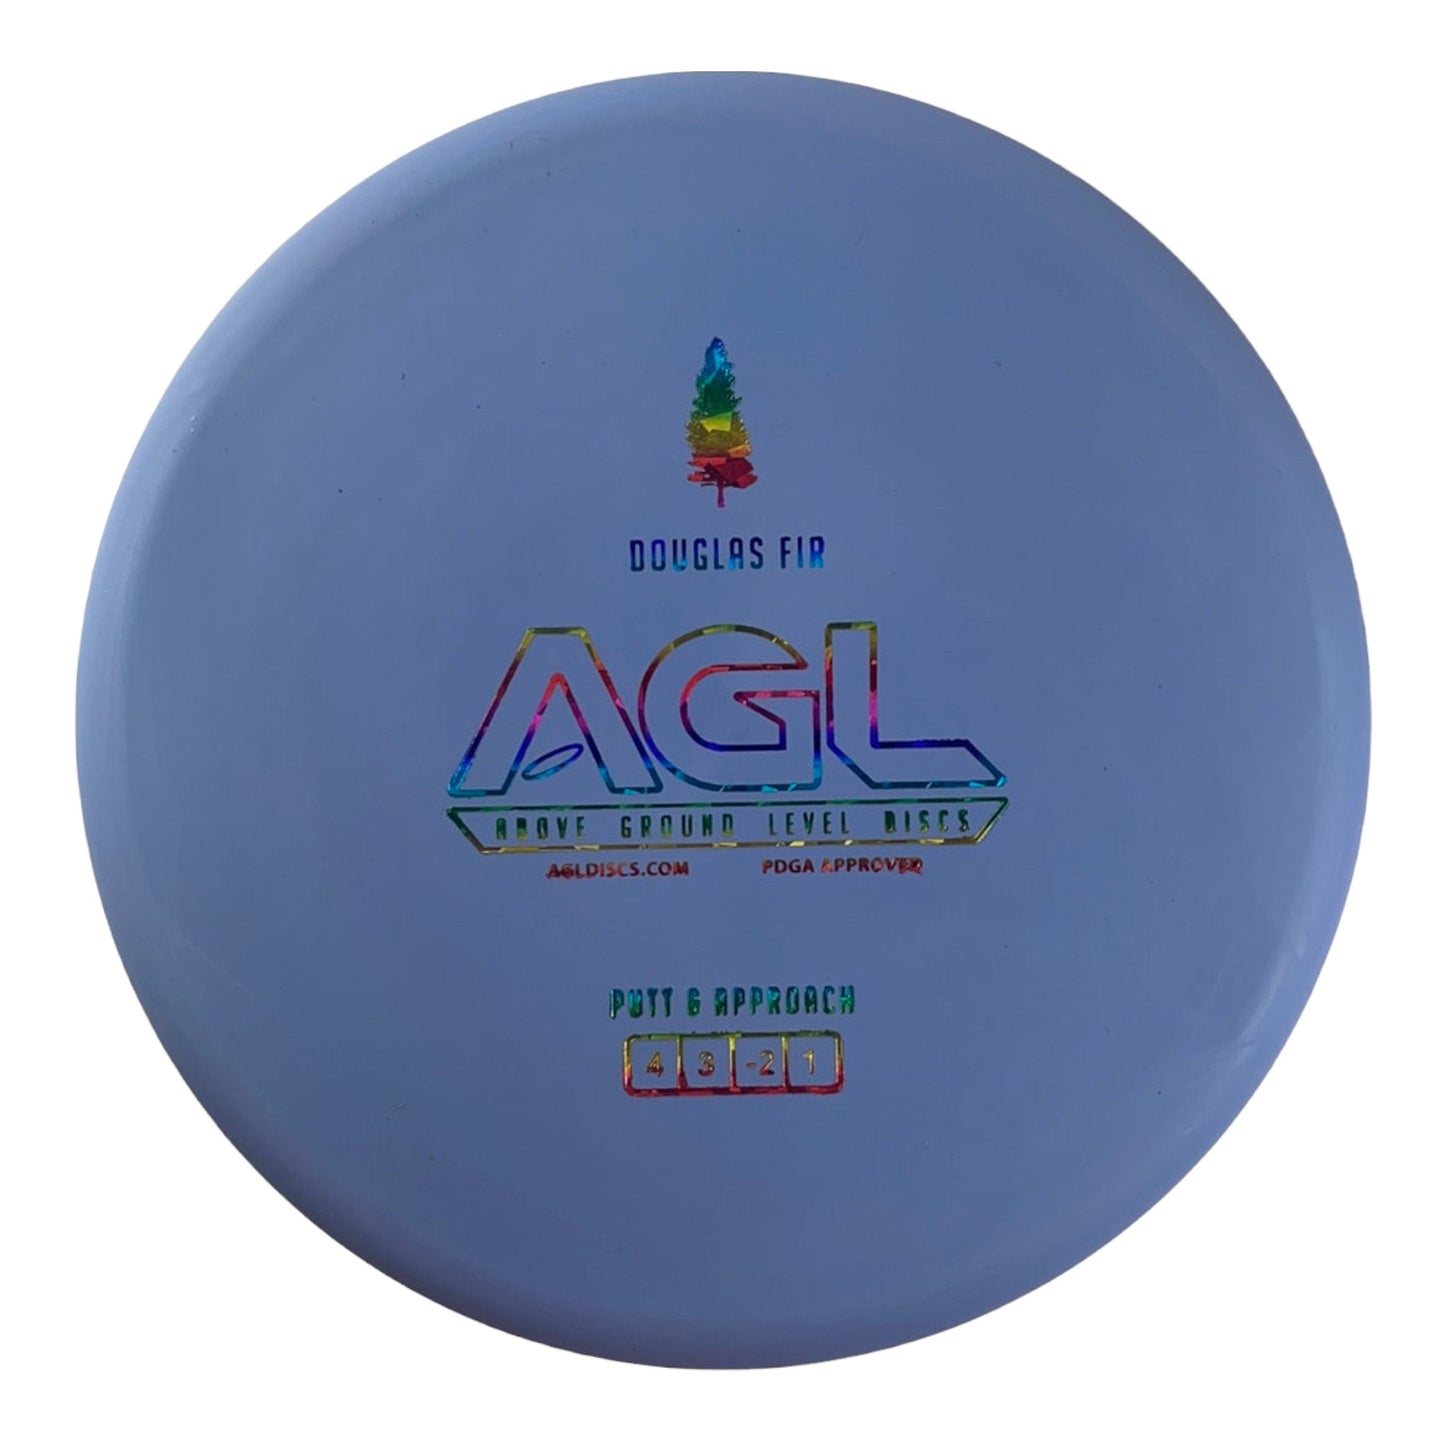 Above Ground Level Douglas Fir | Woodland | Blue/Rainbow 166g Disc Golf